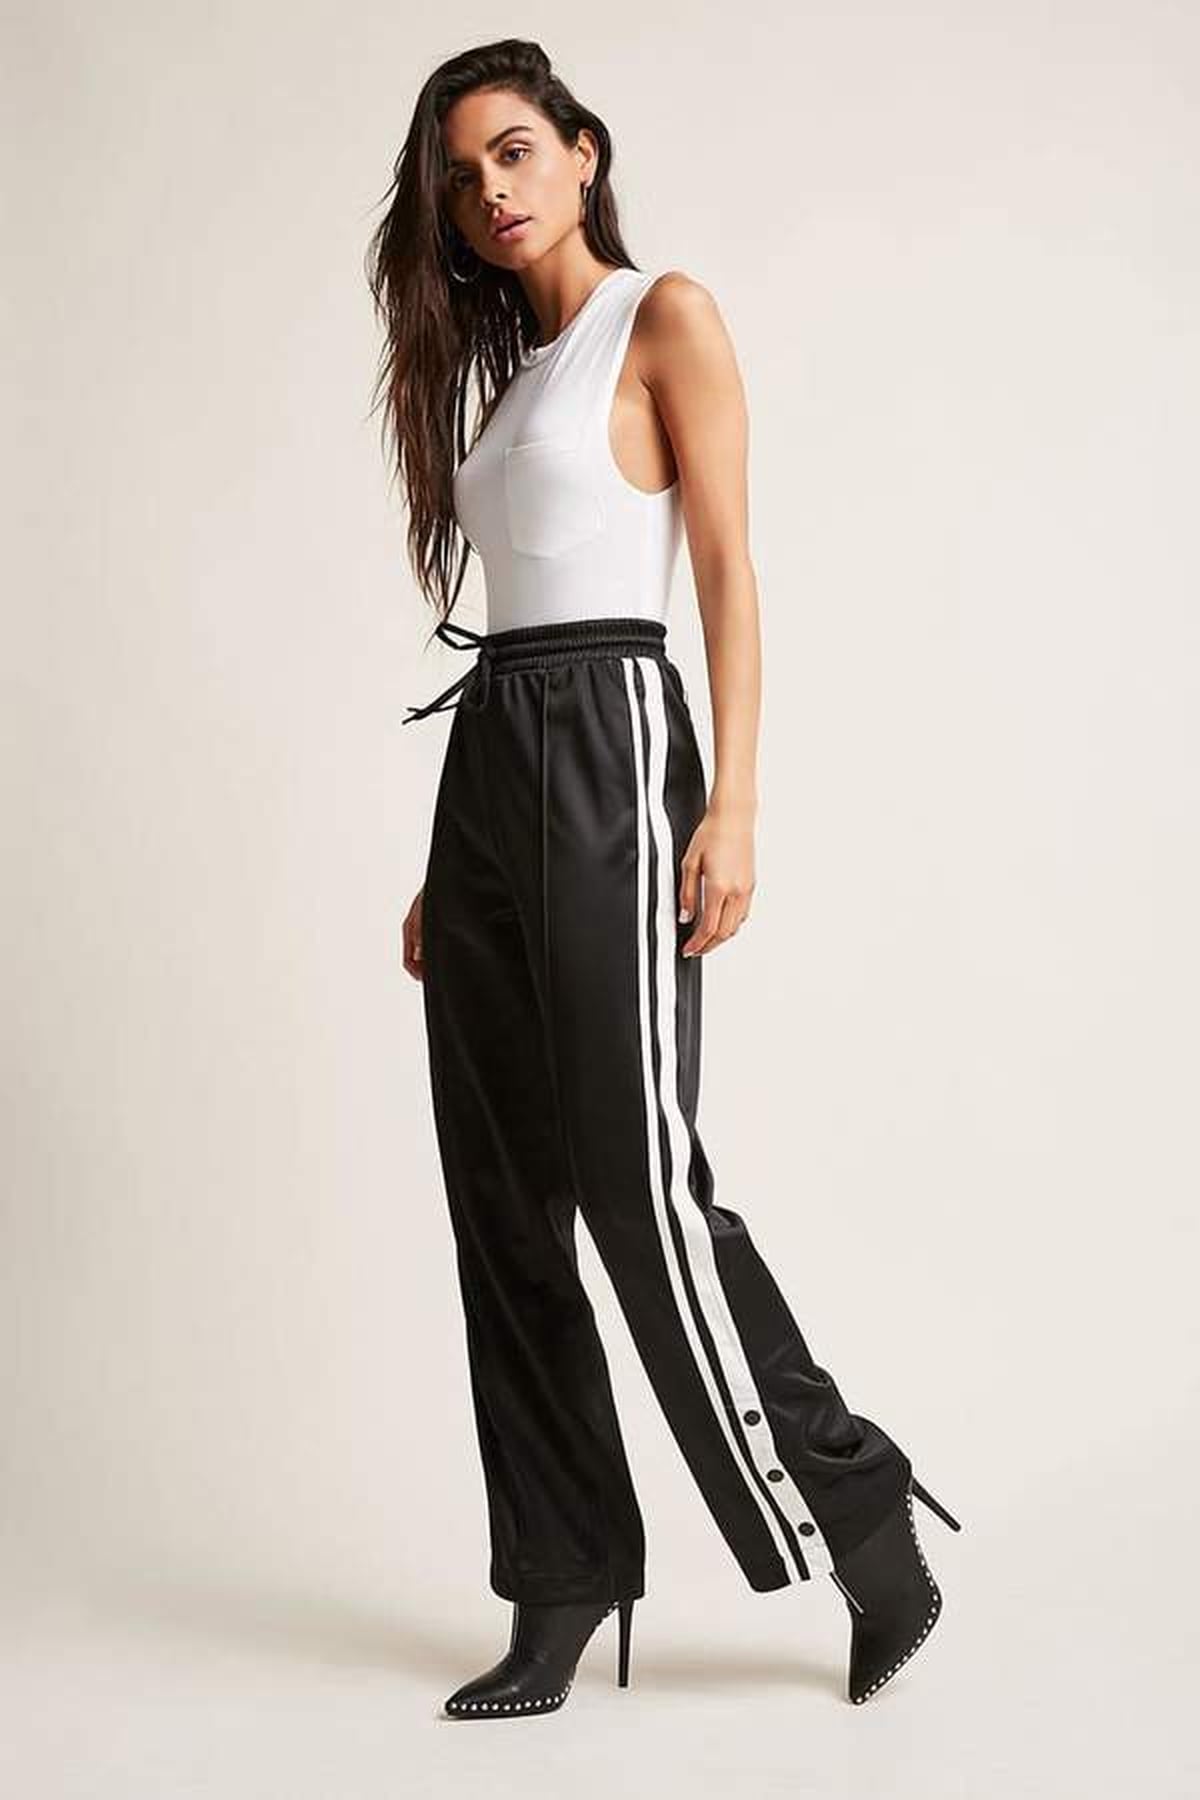 Kendall Jenner's Adidas Track Suit | POPSUGAR Fashion